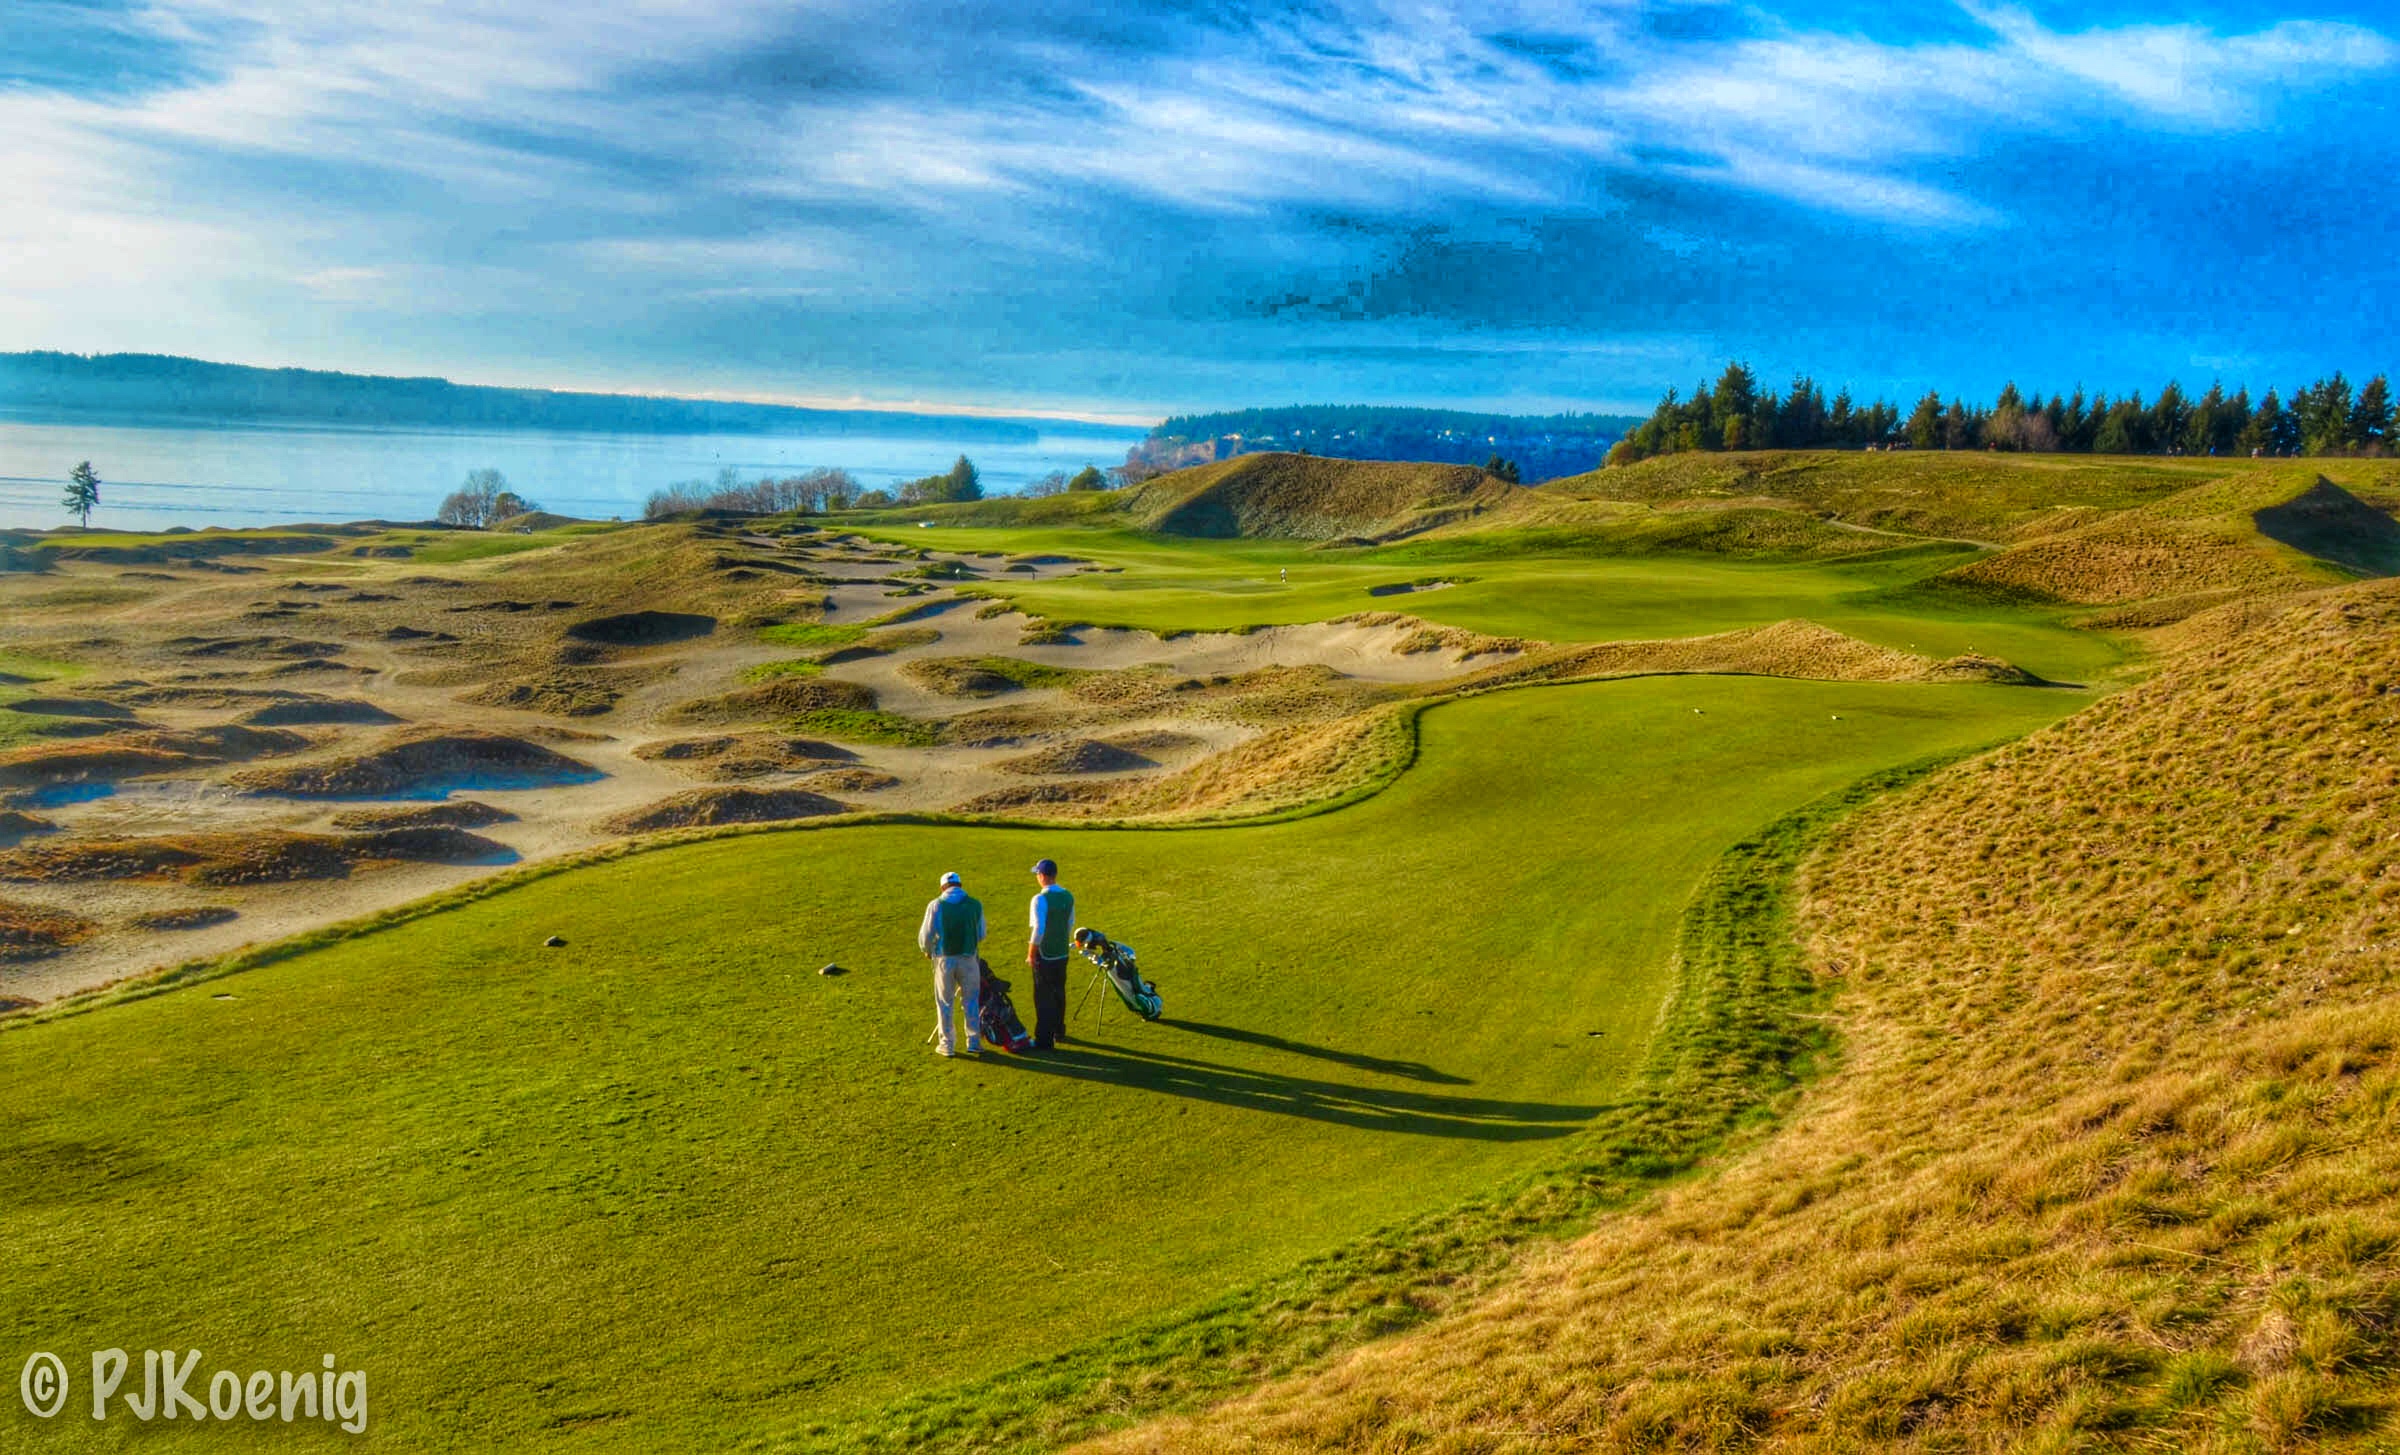 PJKoenig Golf Photography